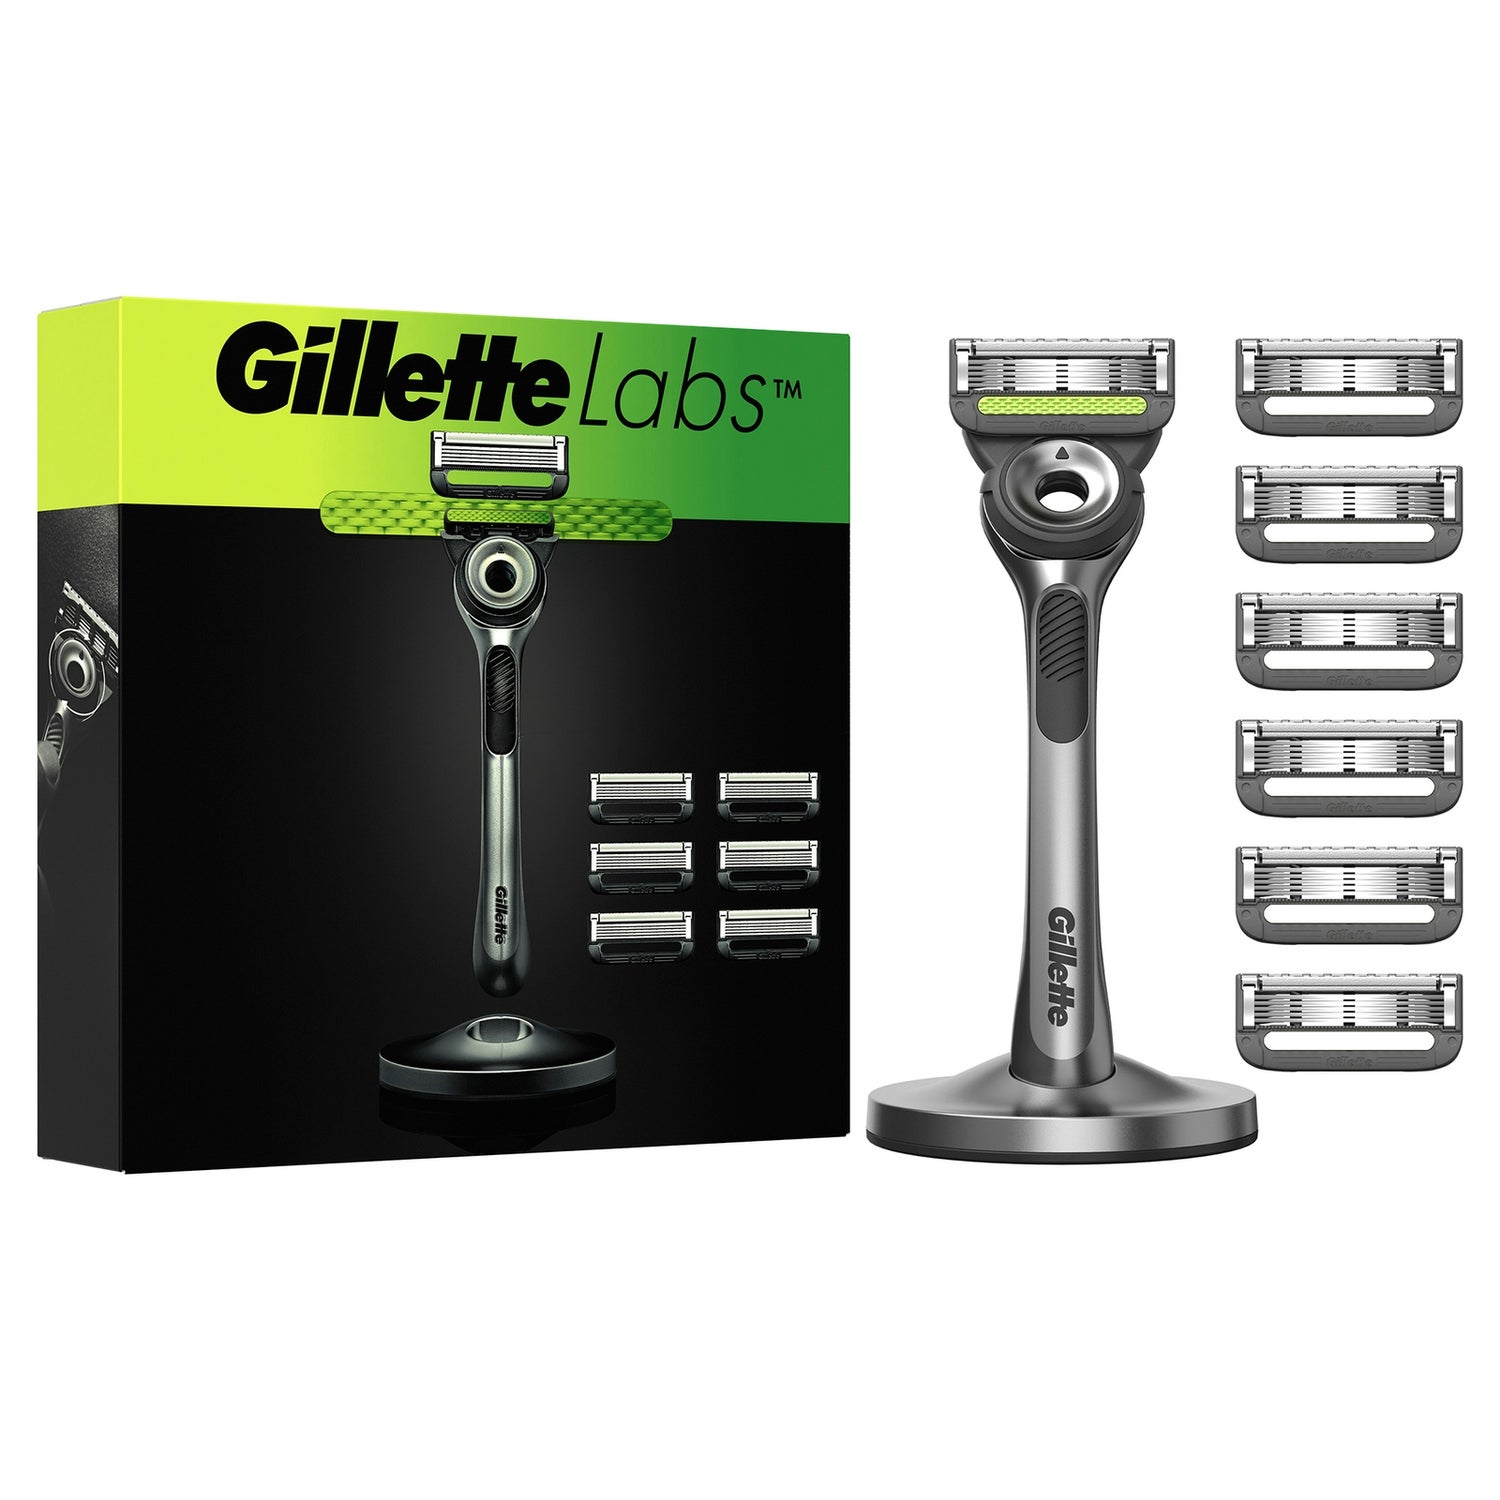 Gillette Labs Razor Silver Edition Value Pack